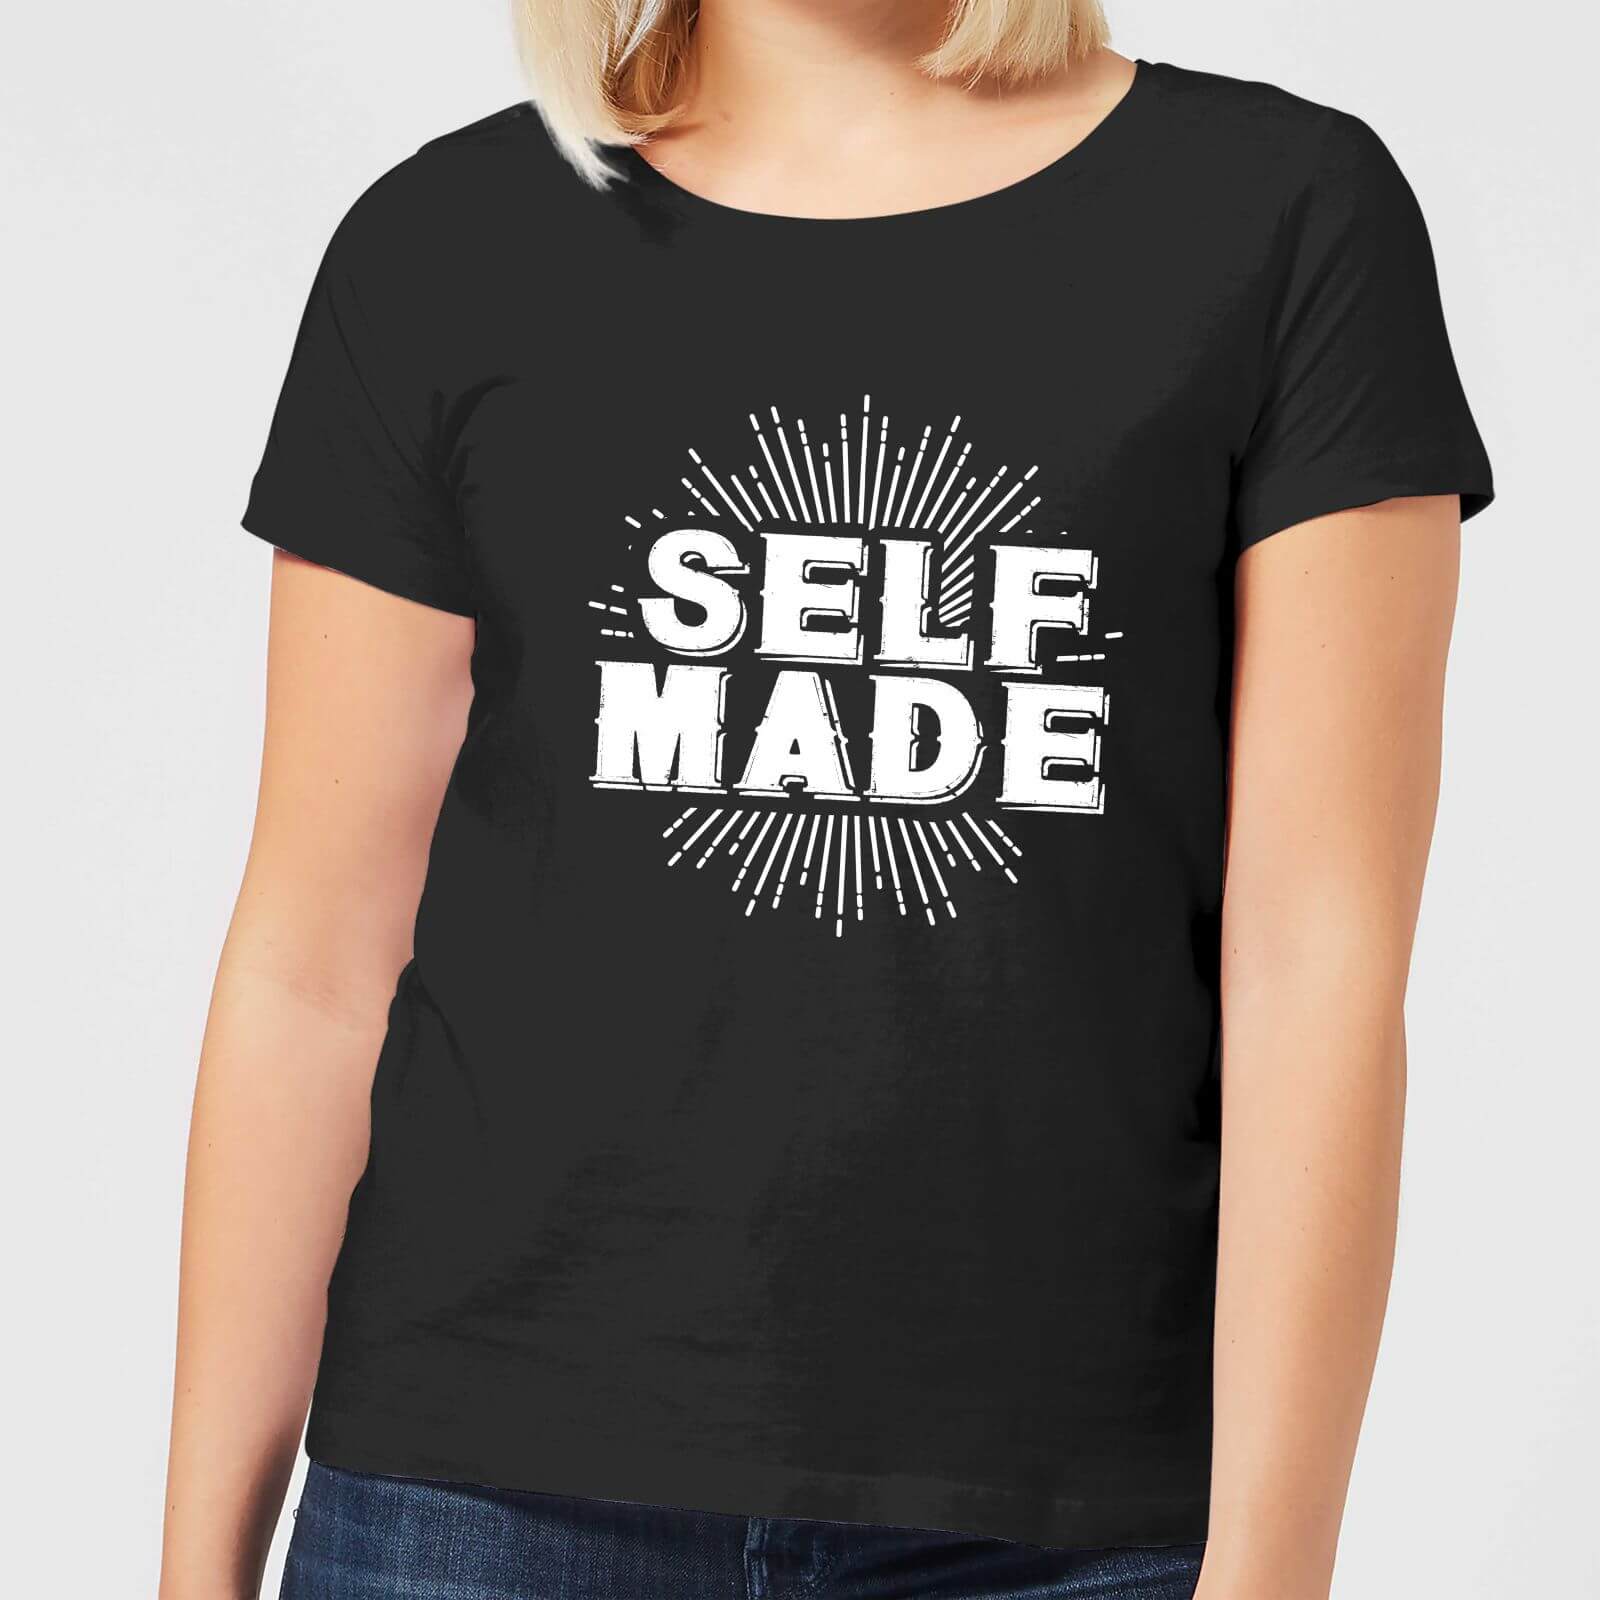 Self Made Women's T-Shirt - Black - 3XL - Black